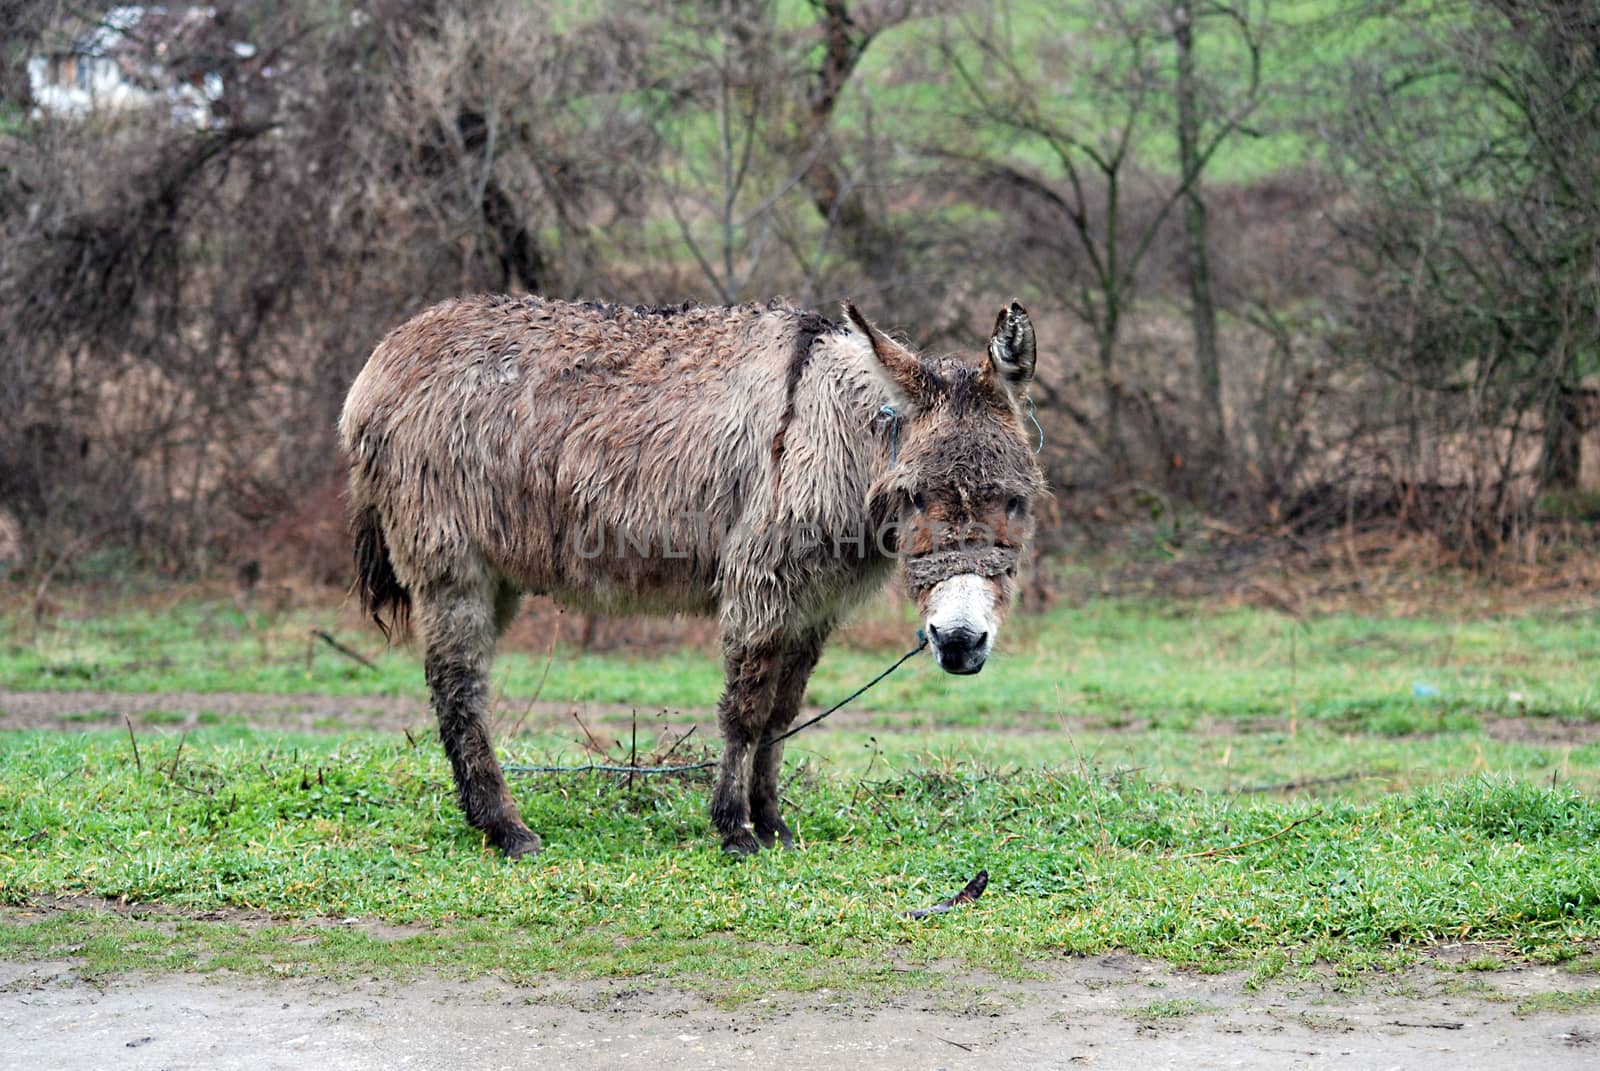 Poor wet donkey on the rain by nehru